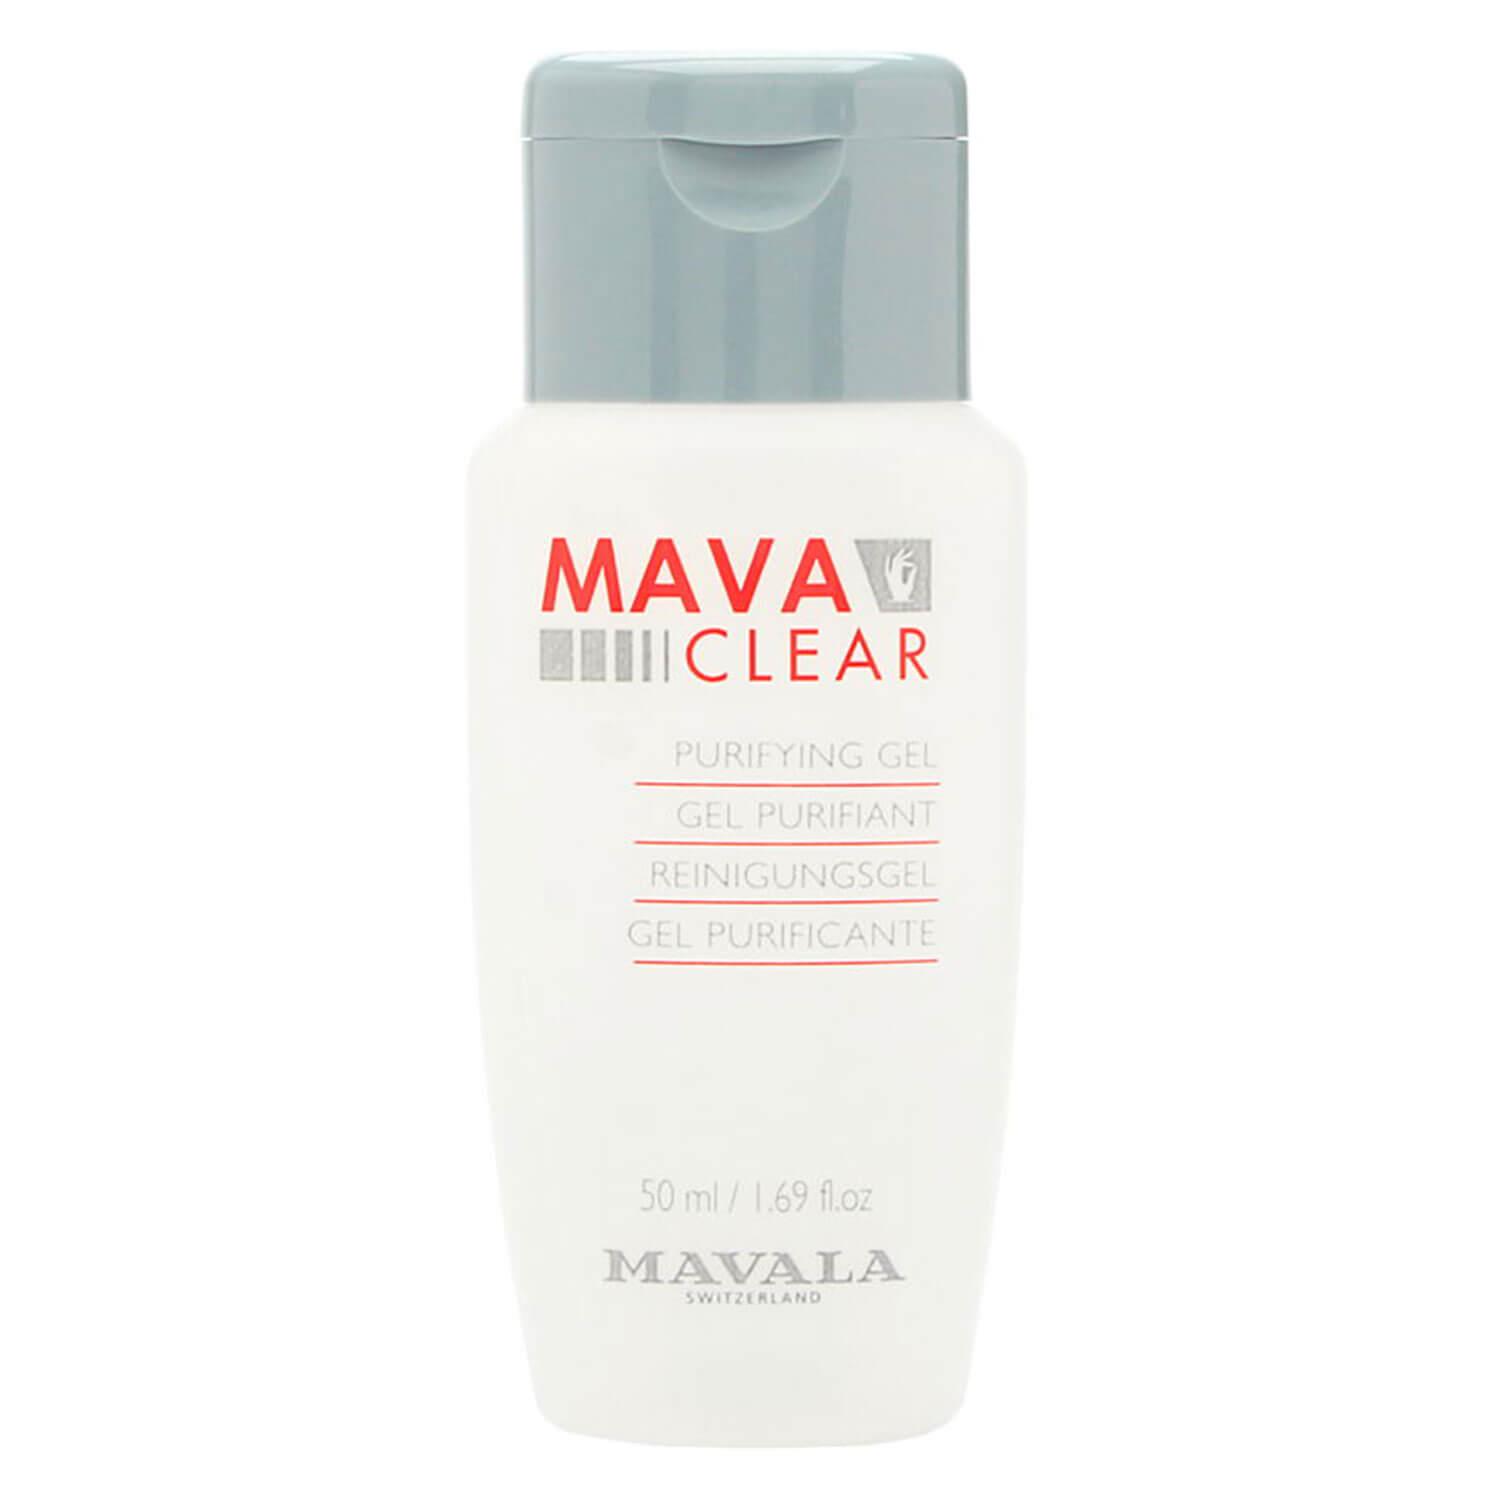 MAVALA Care - Mava Clear Purifying Gel